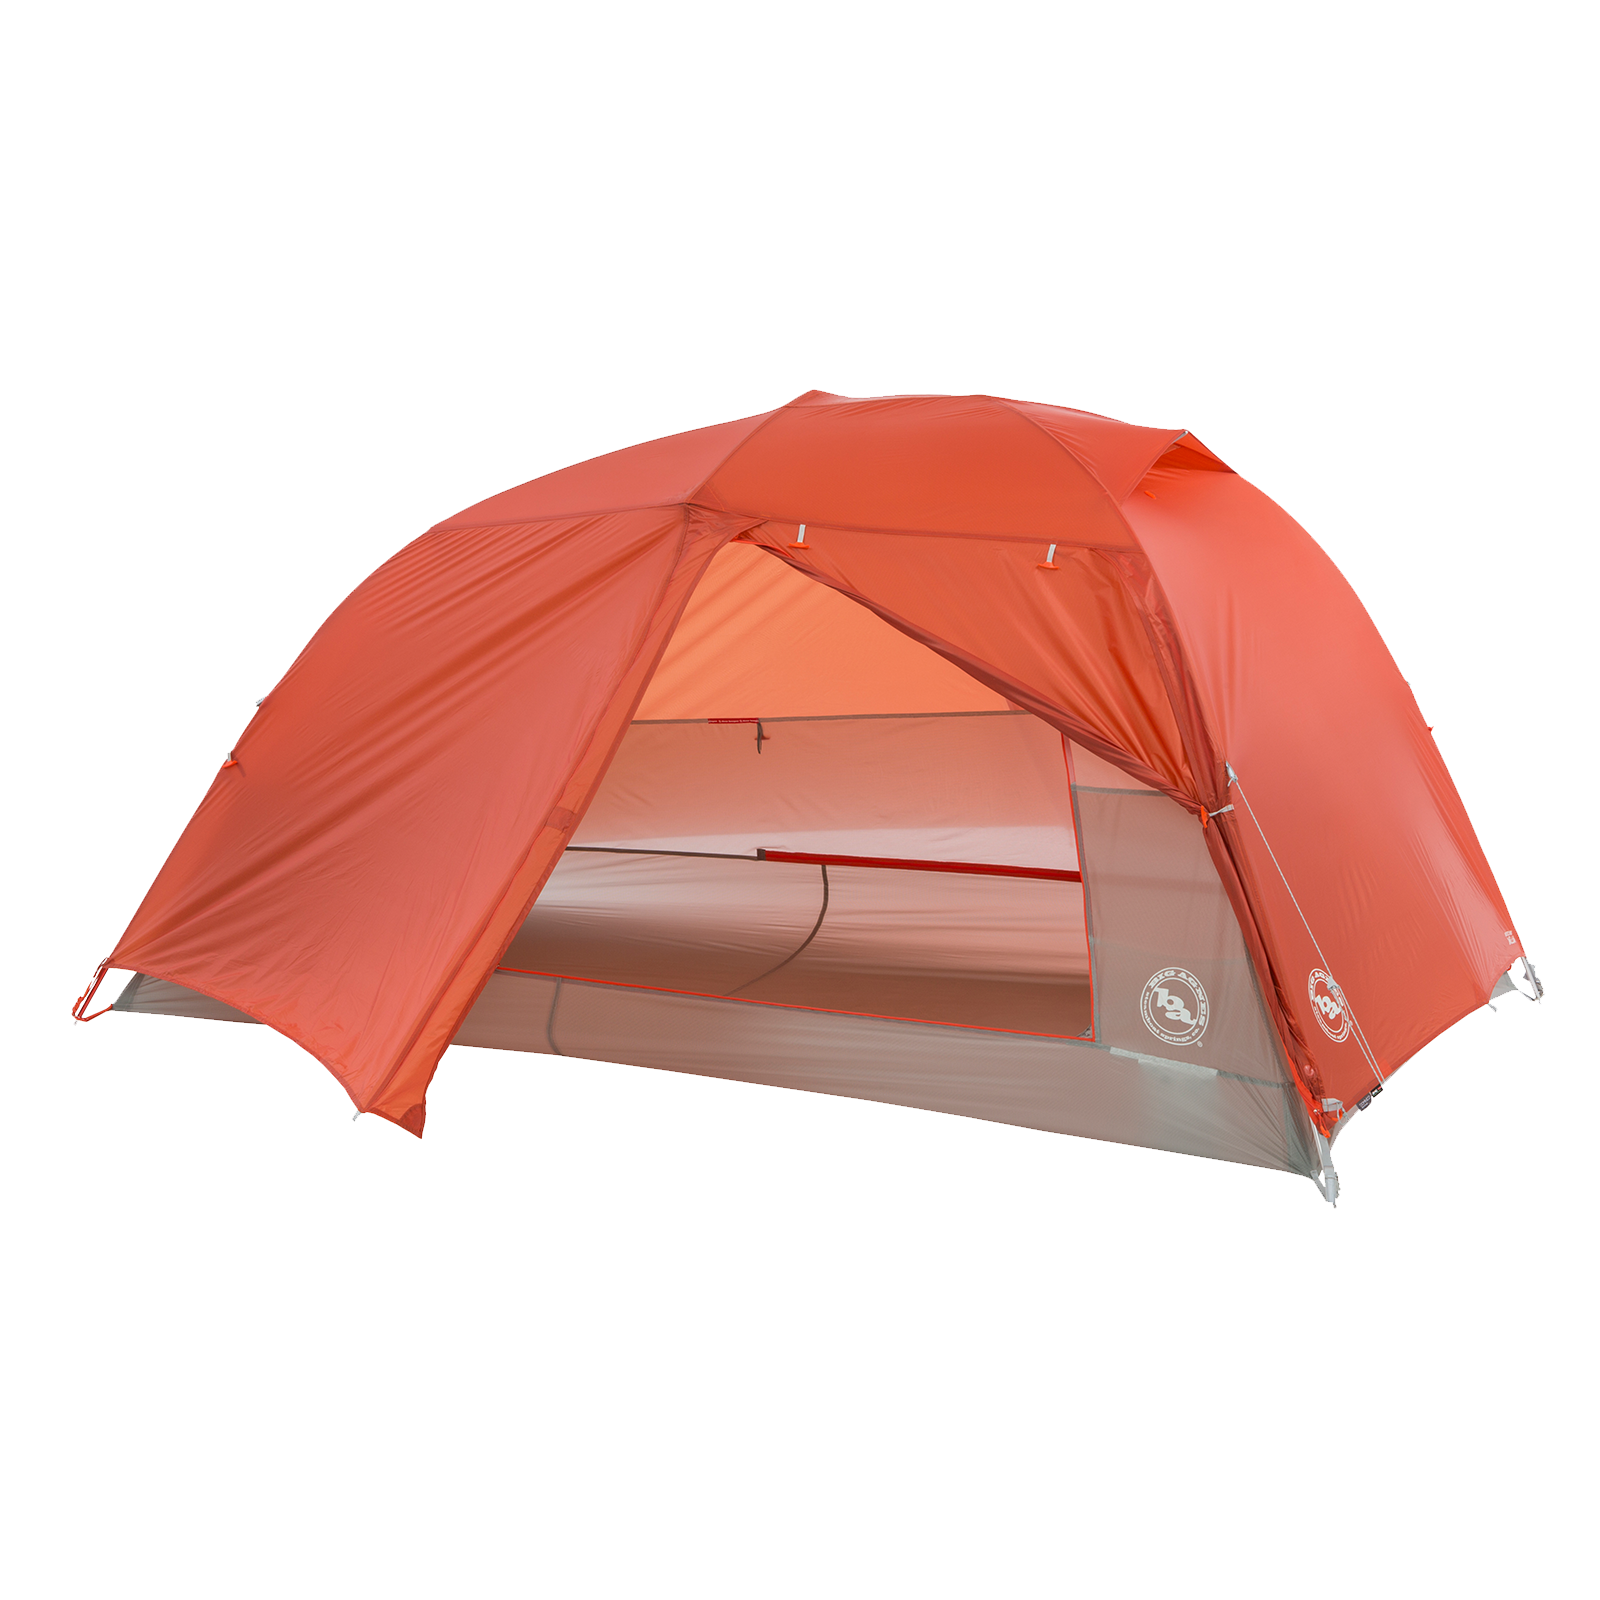 Copper Spur HV UL3 Ultralight Tent, Big Agnes